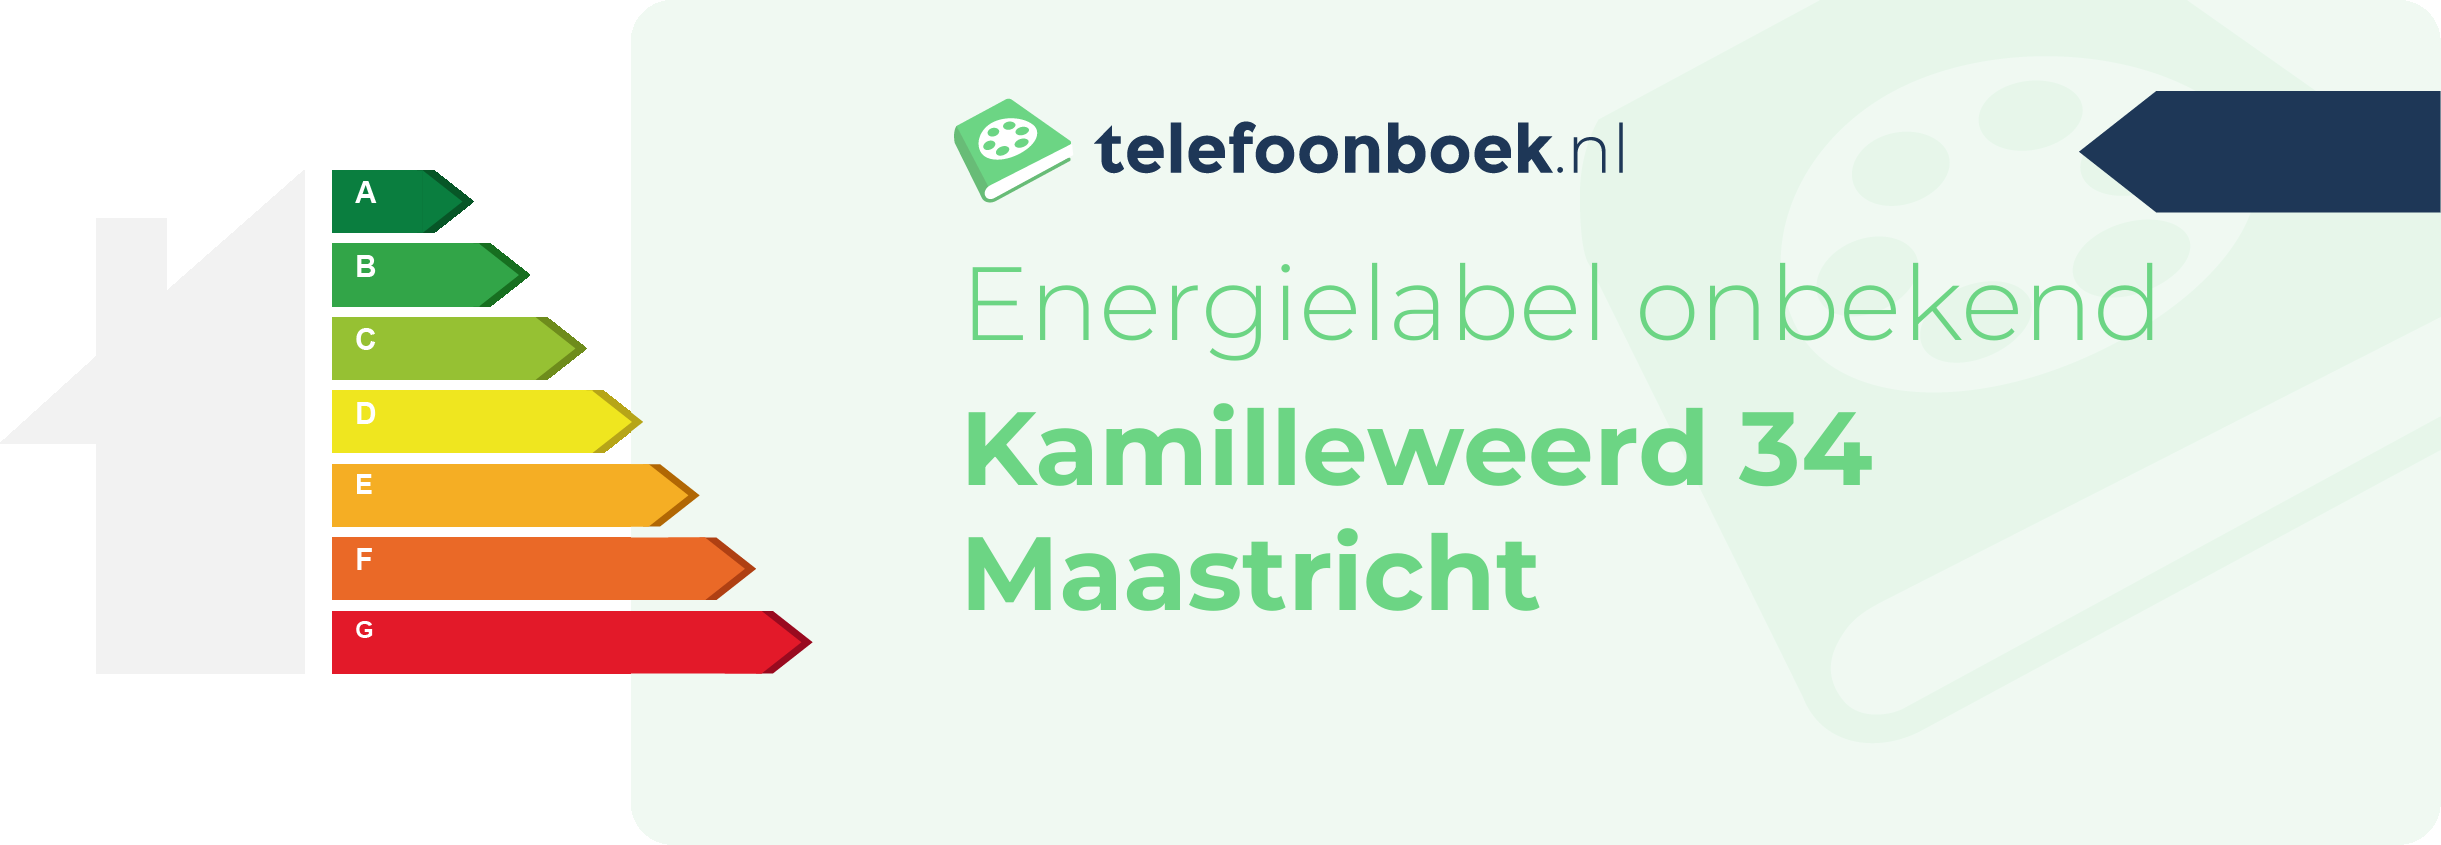 Energielabel Kamilleweerd 34 Maastricht